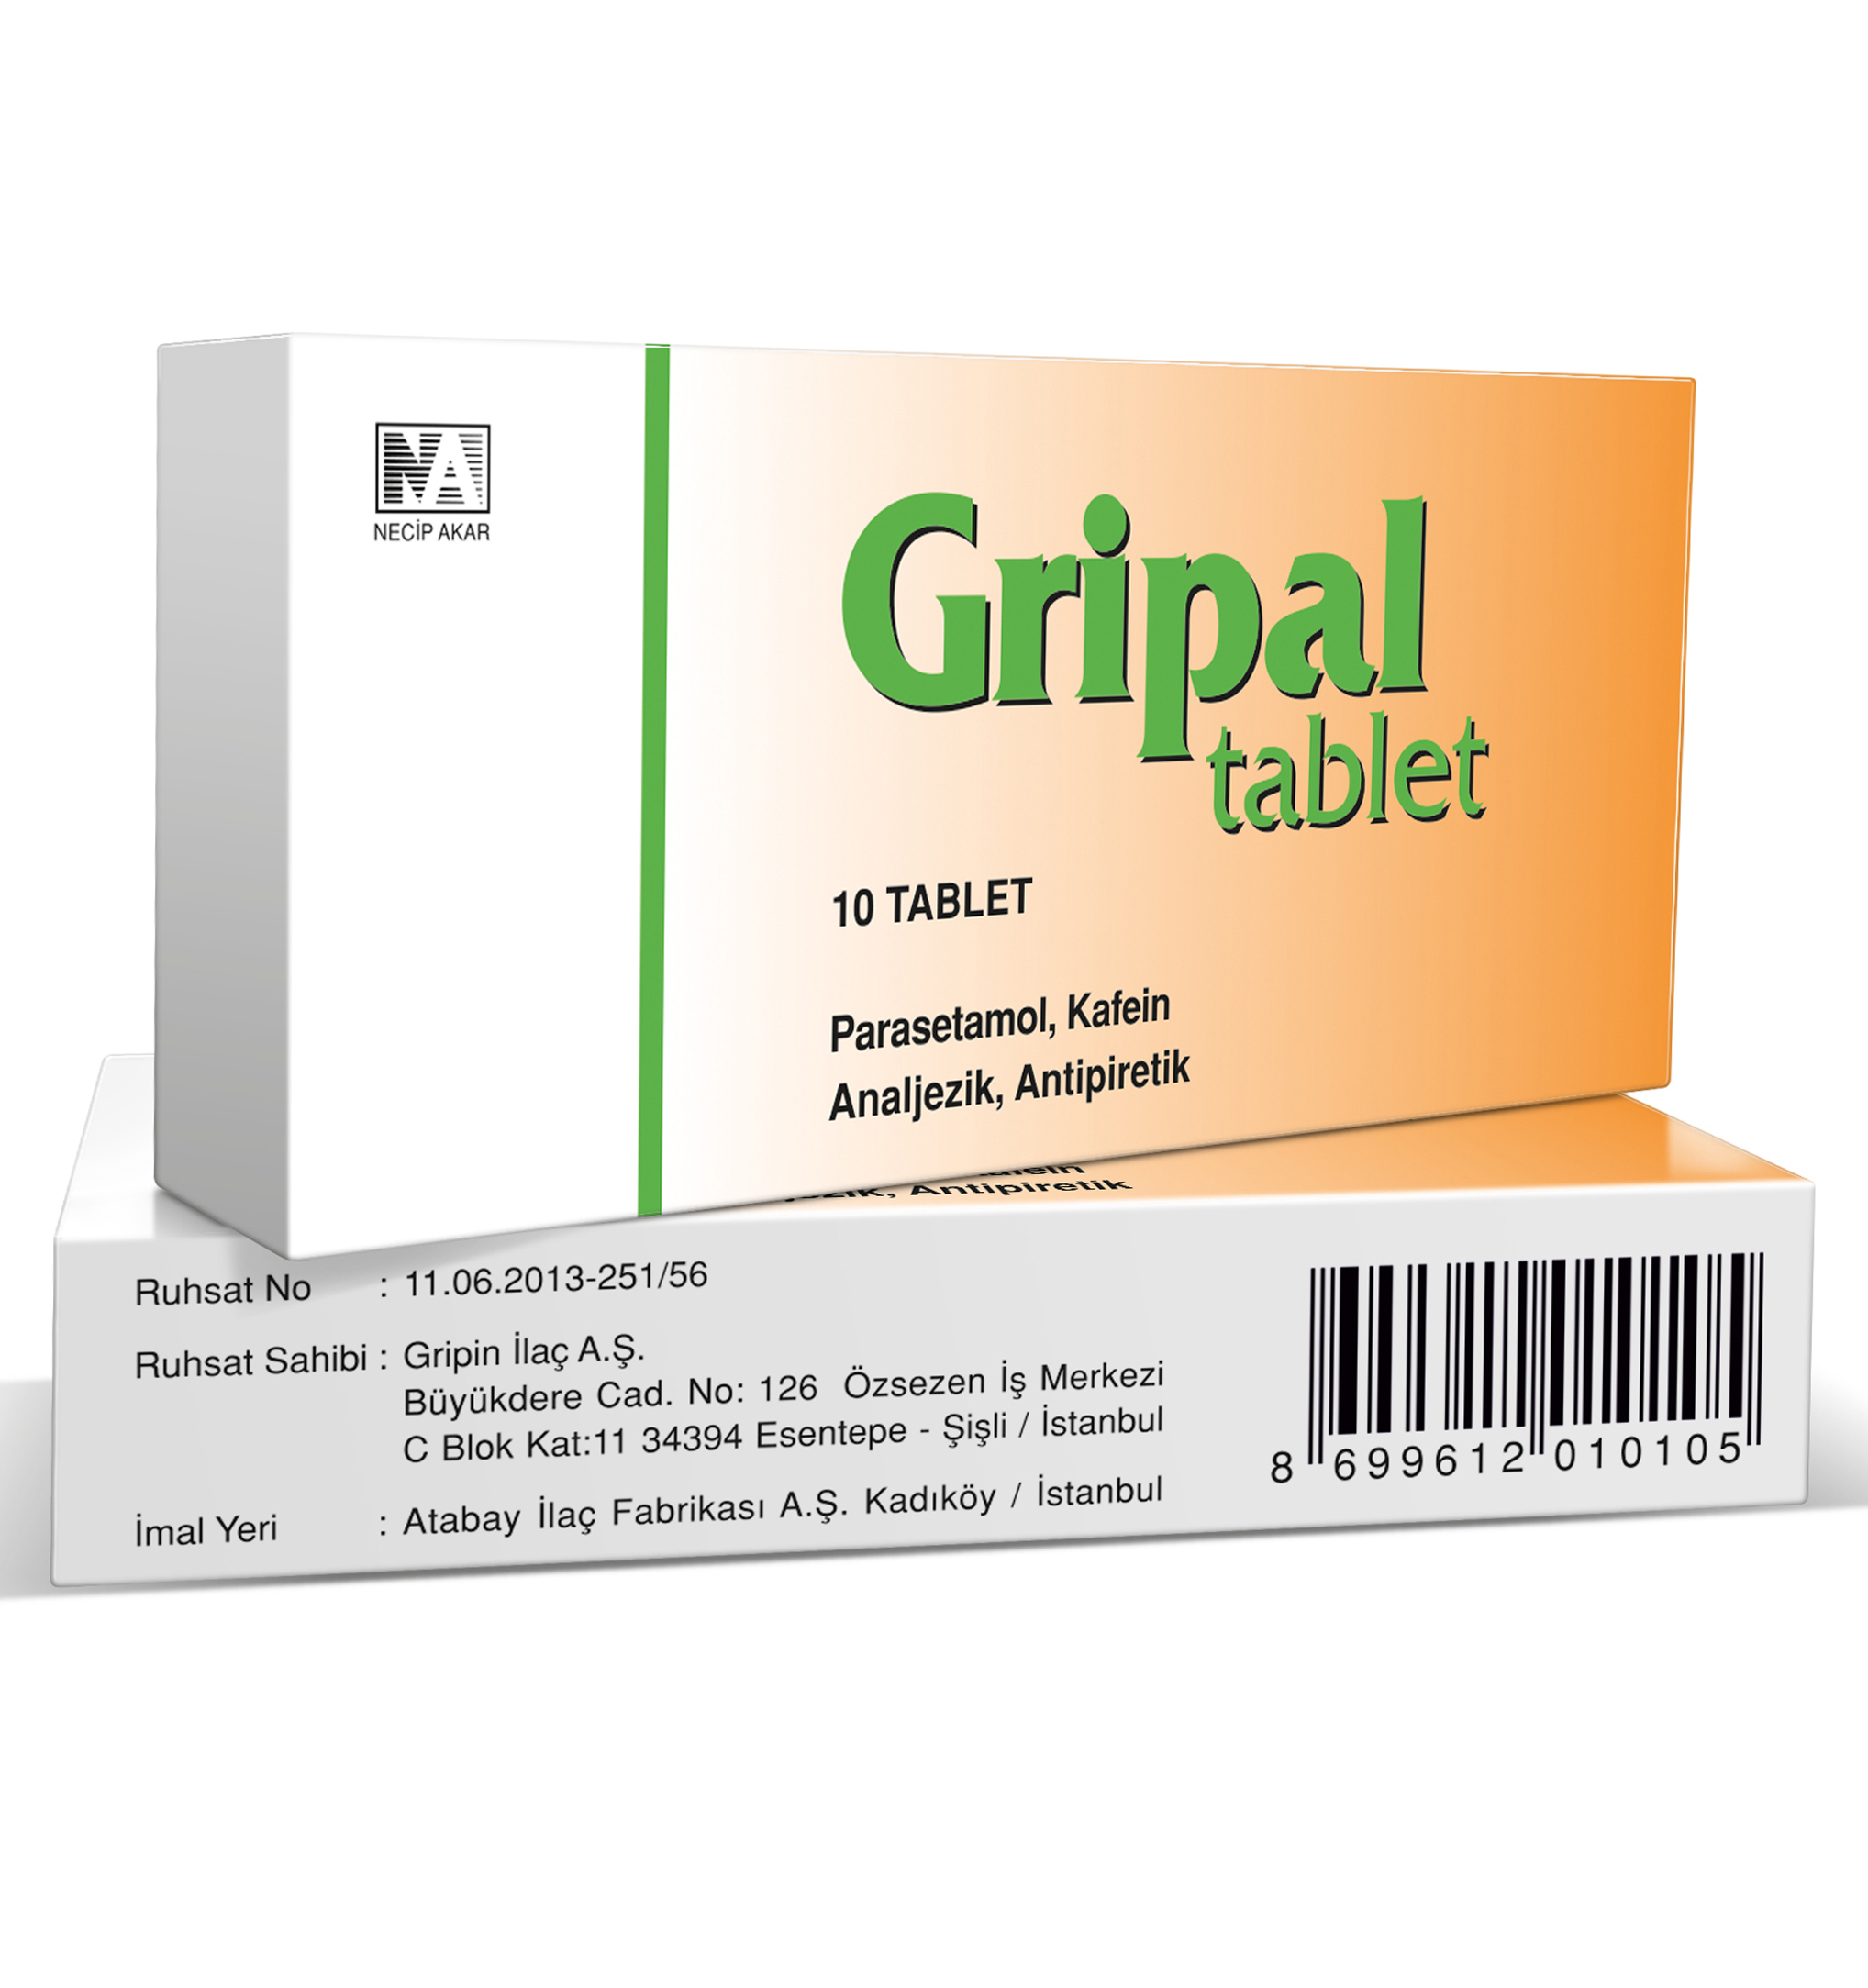 GRIPAL 10 tablet kutusunun resmi